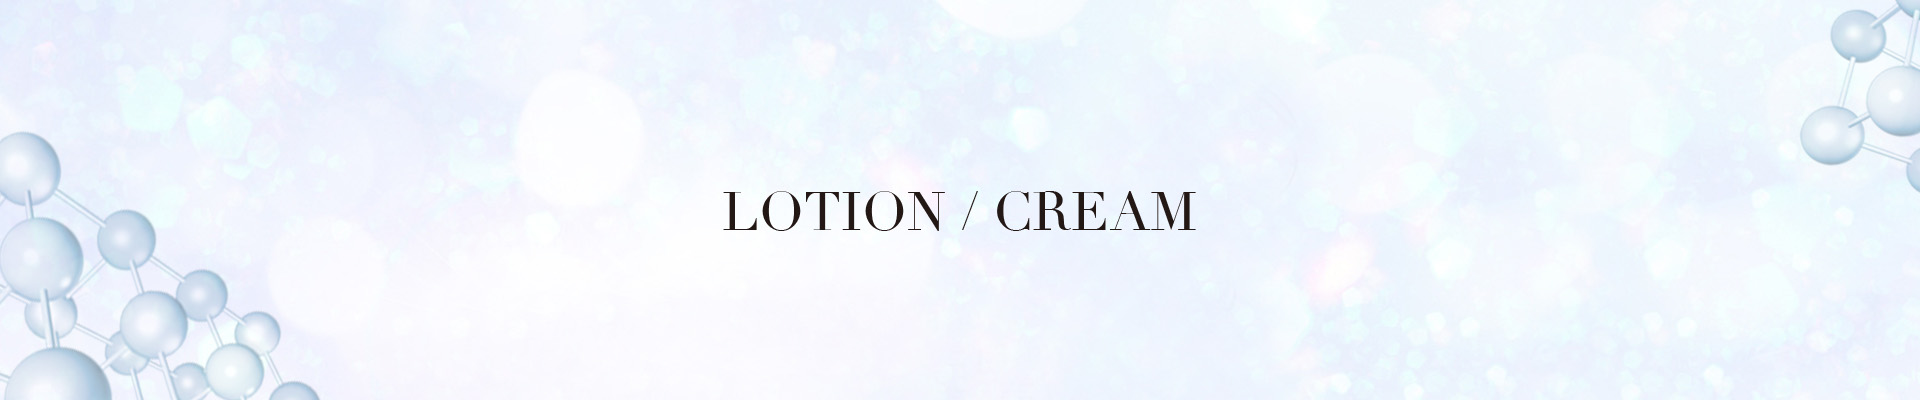 Lotion/Cream